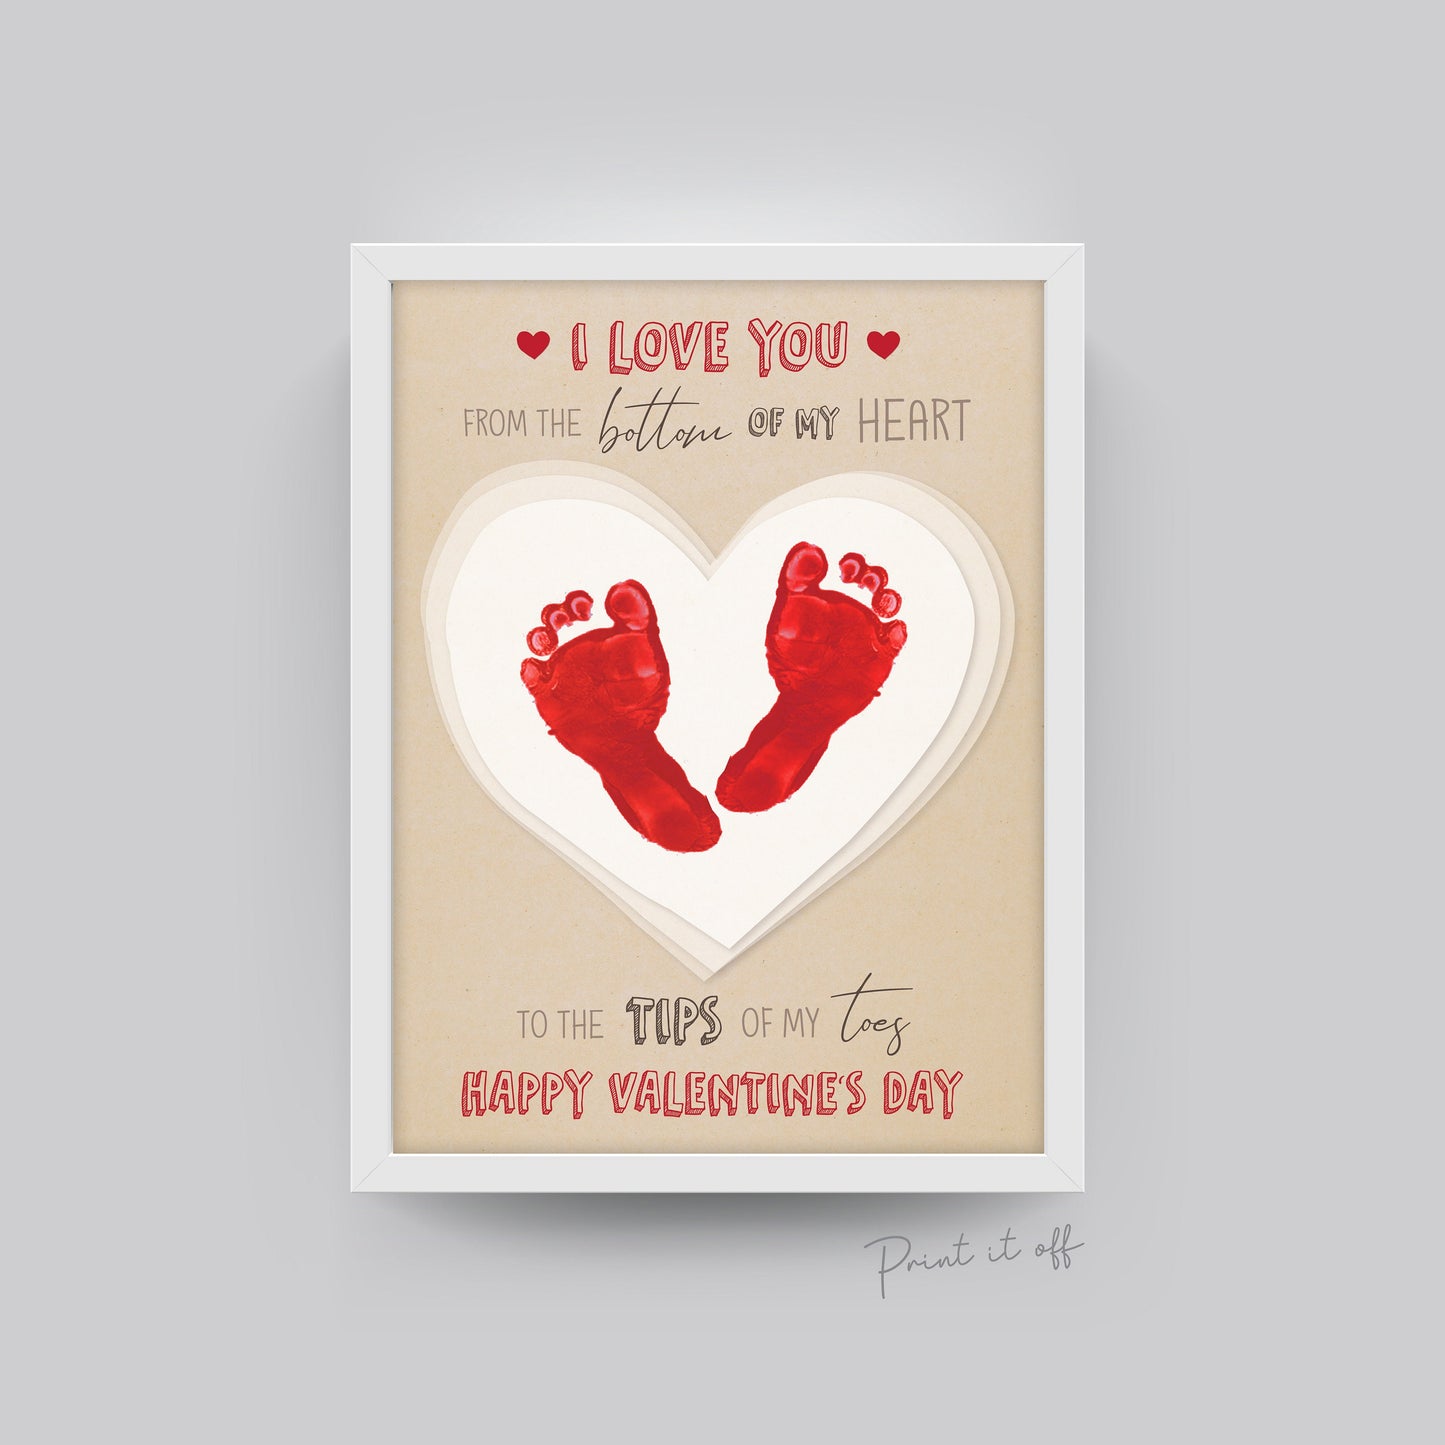 Bottom of my Heart - Tips of my Toes / Happy Valentine's Day / Footprint Heart Love / Handprint DIY Craft Art Baby Kids / Print It Off 0151